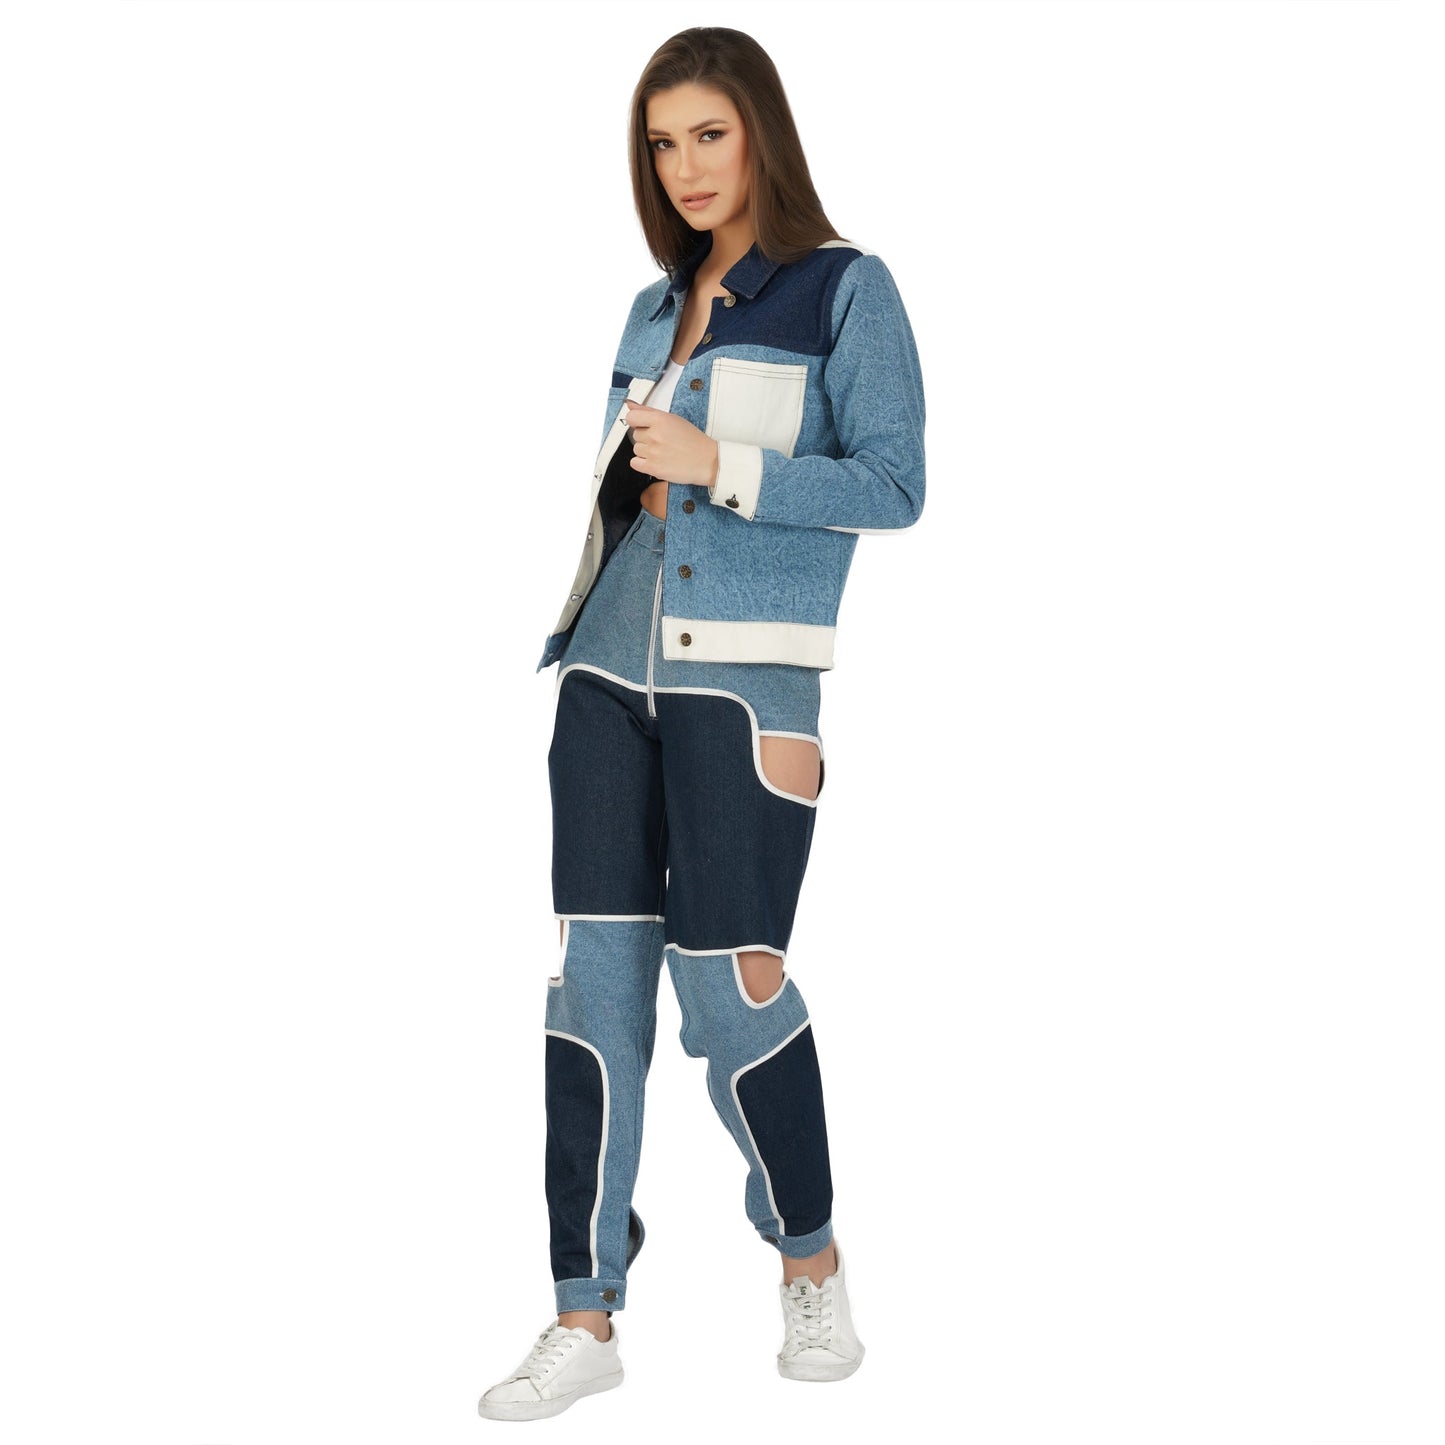 SLAY. Women's Blue & White Colorblock Denim Jeans & Crop top Co-ord Set